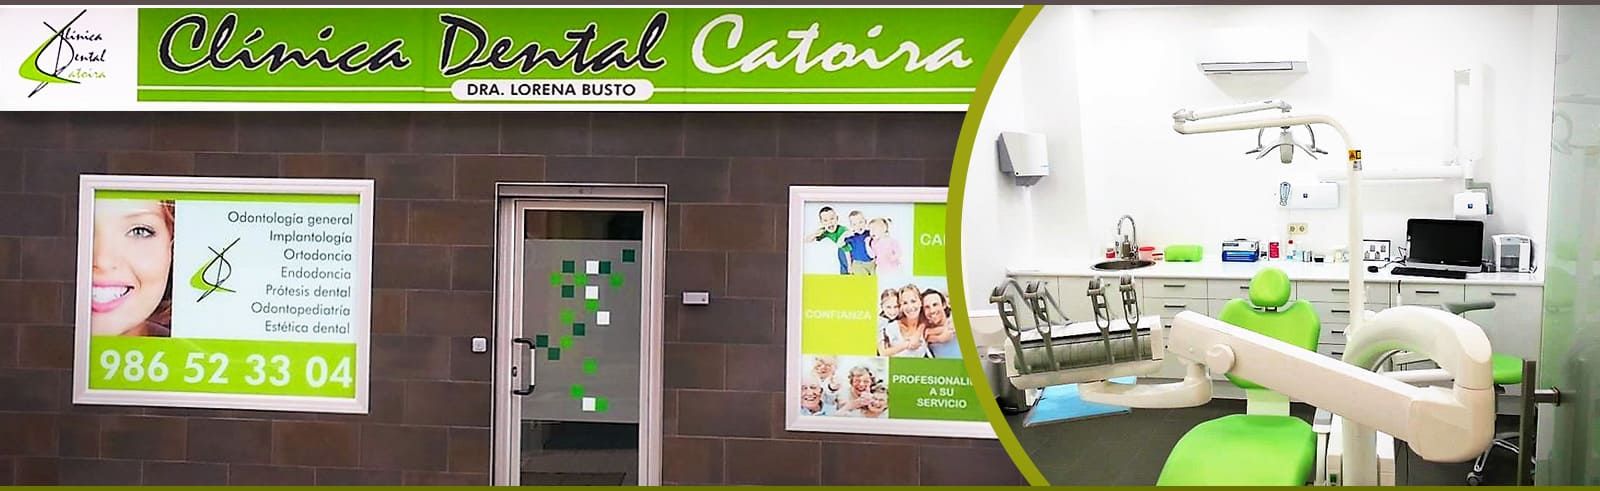 Clínica Dental Catoira Dra. Lorena Busto banner 4